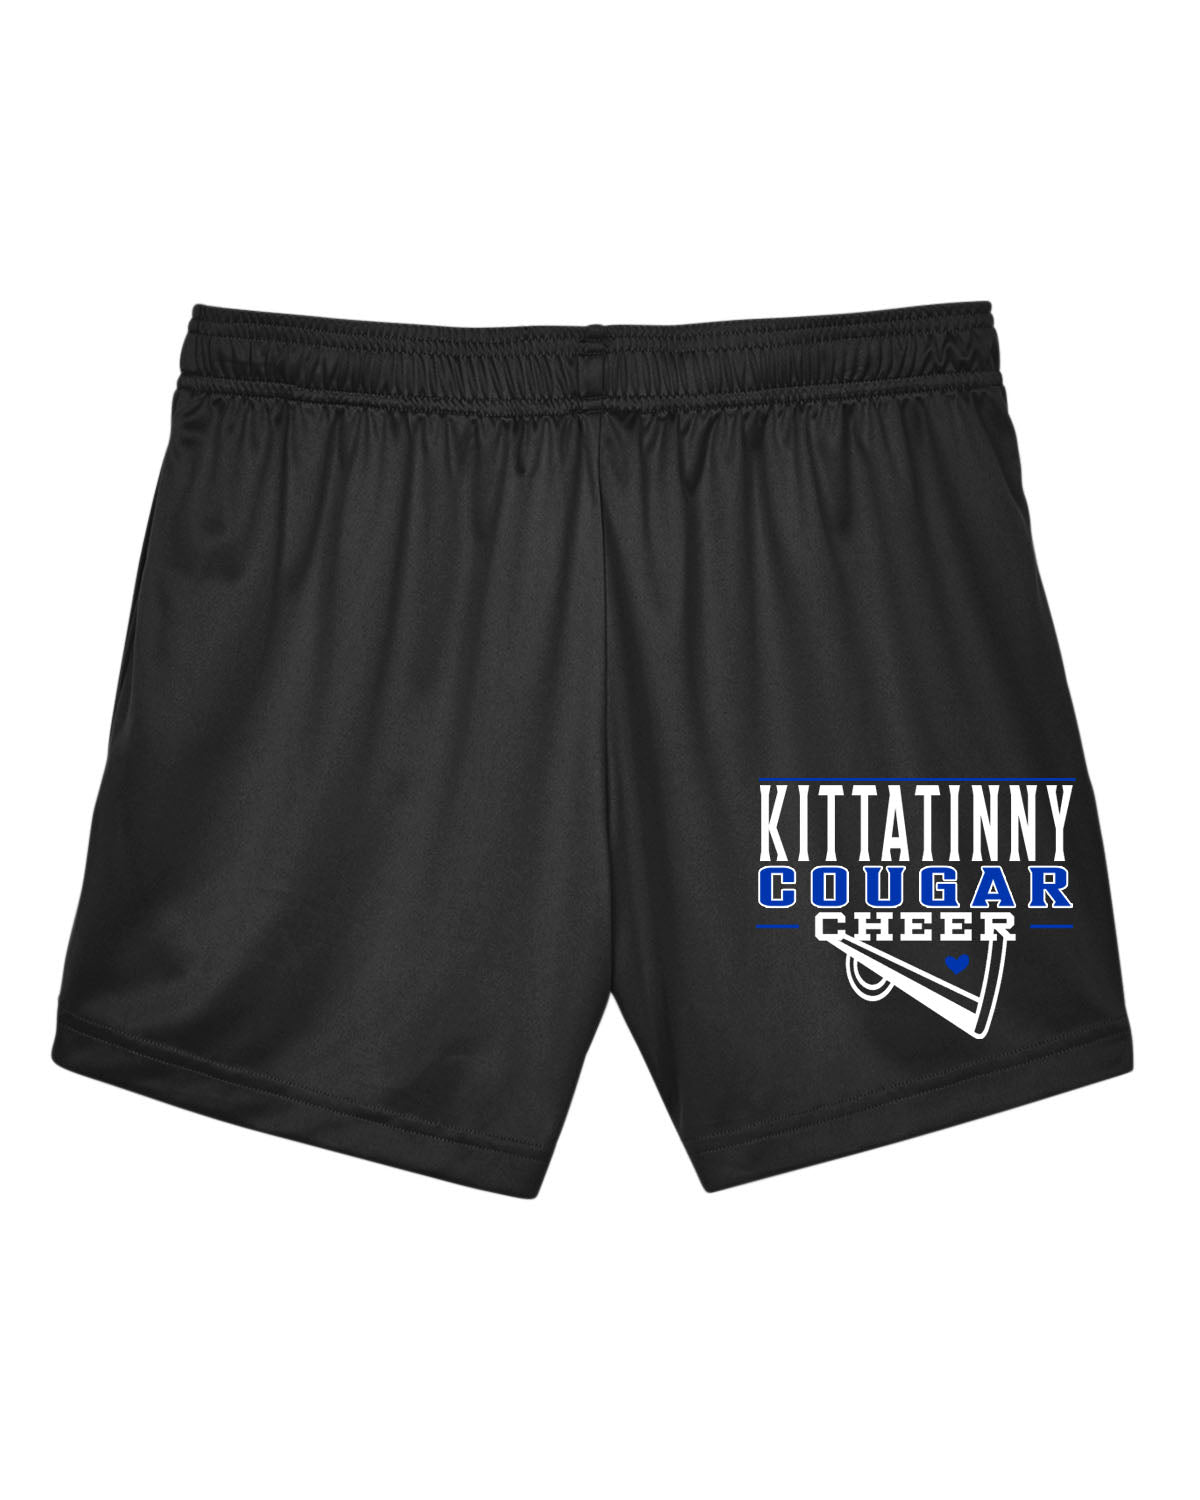 Kittatinny Cheer Ladies Performance Design 11 Shorts